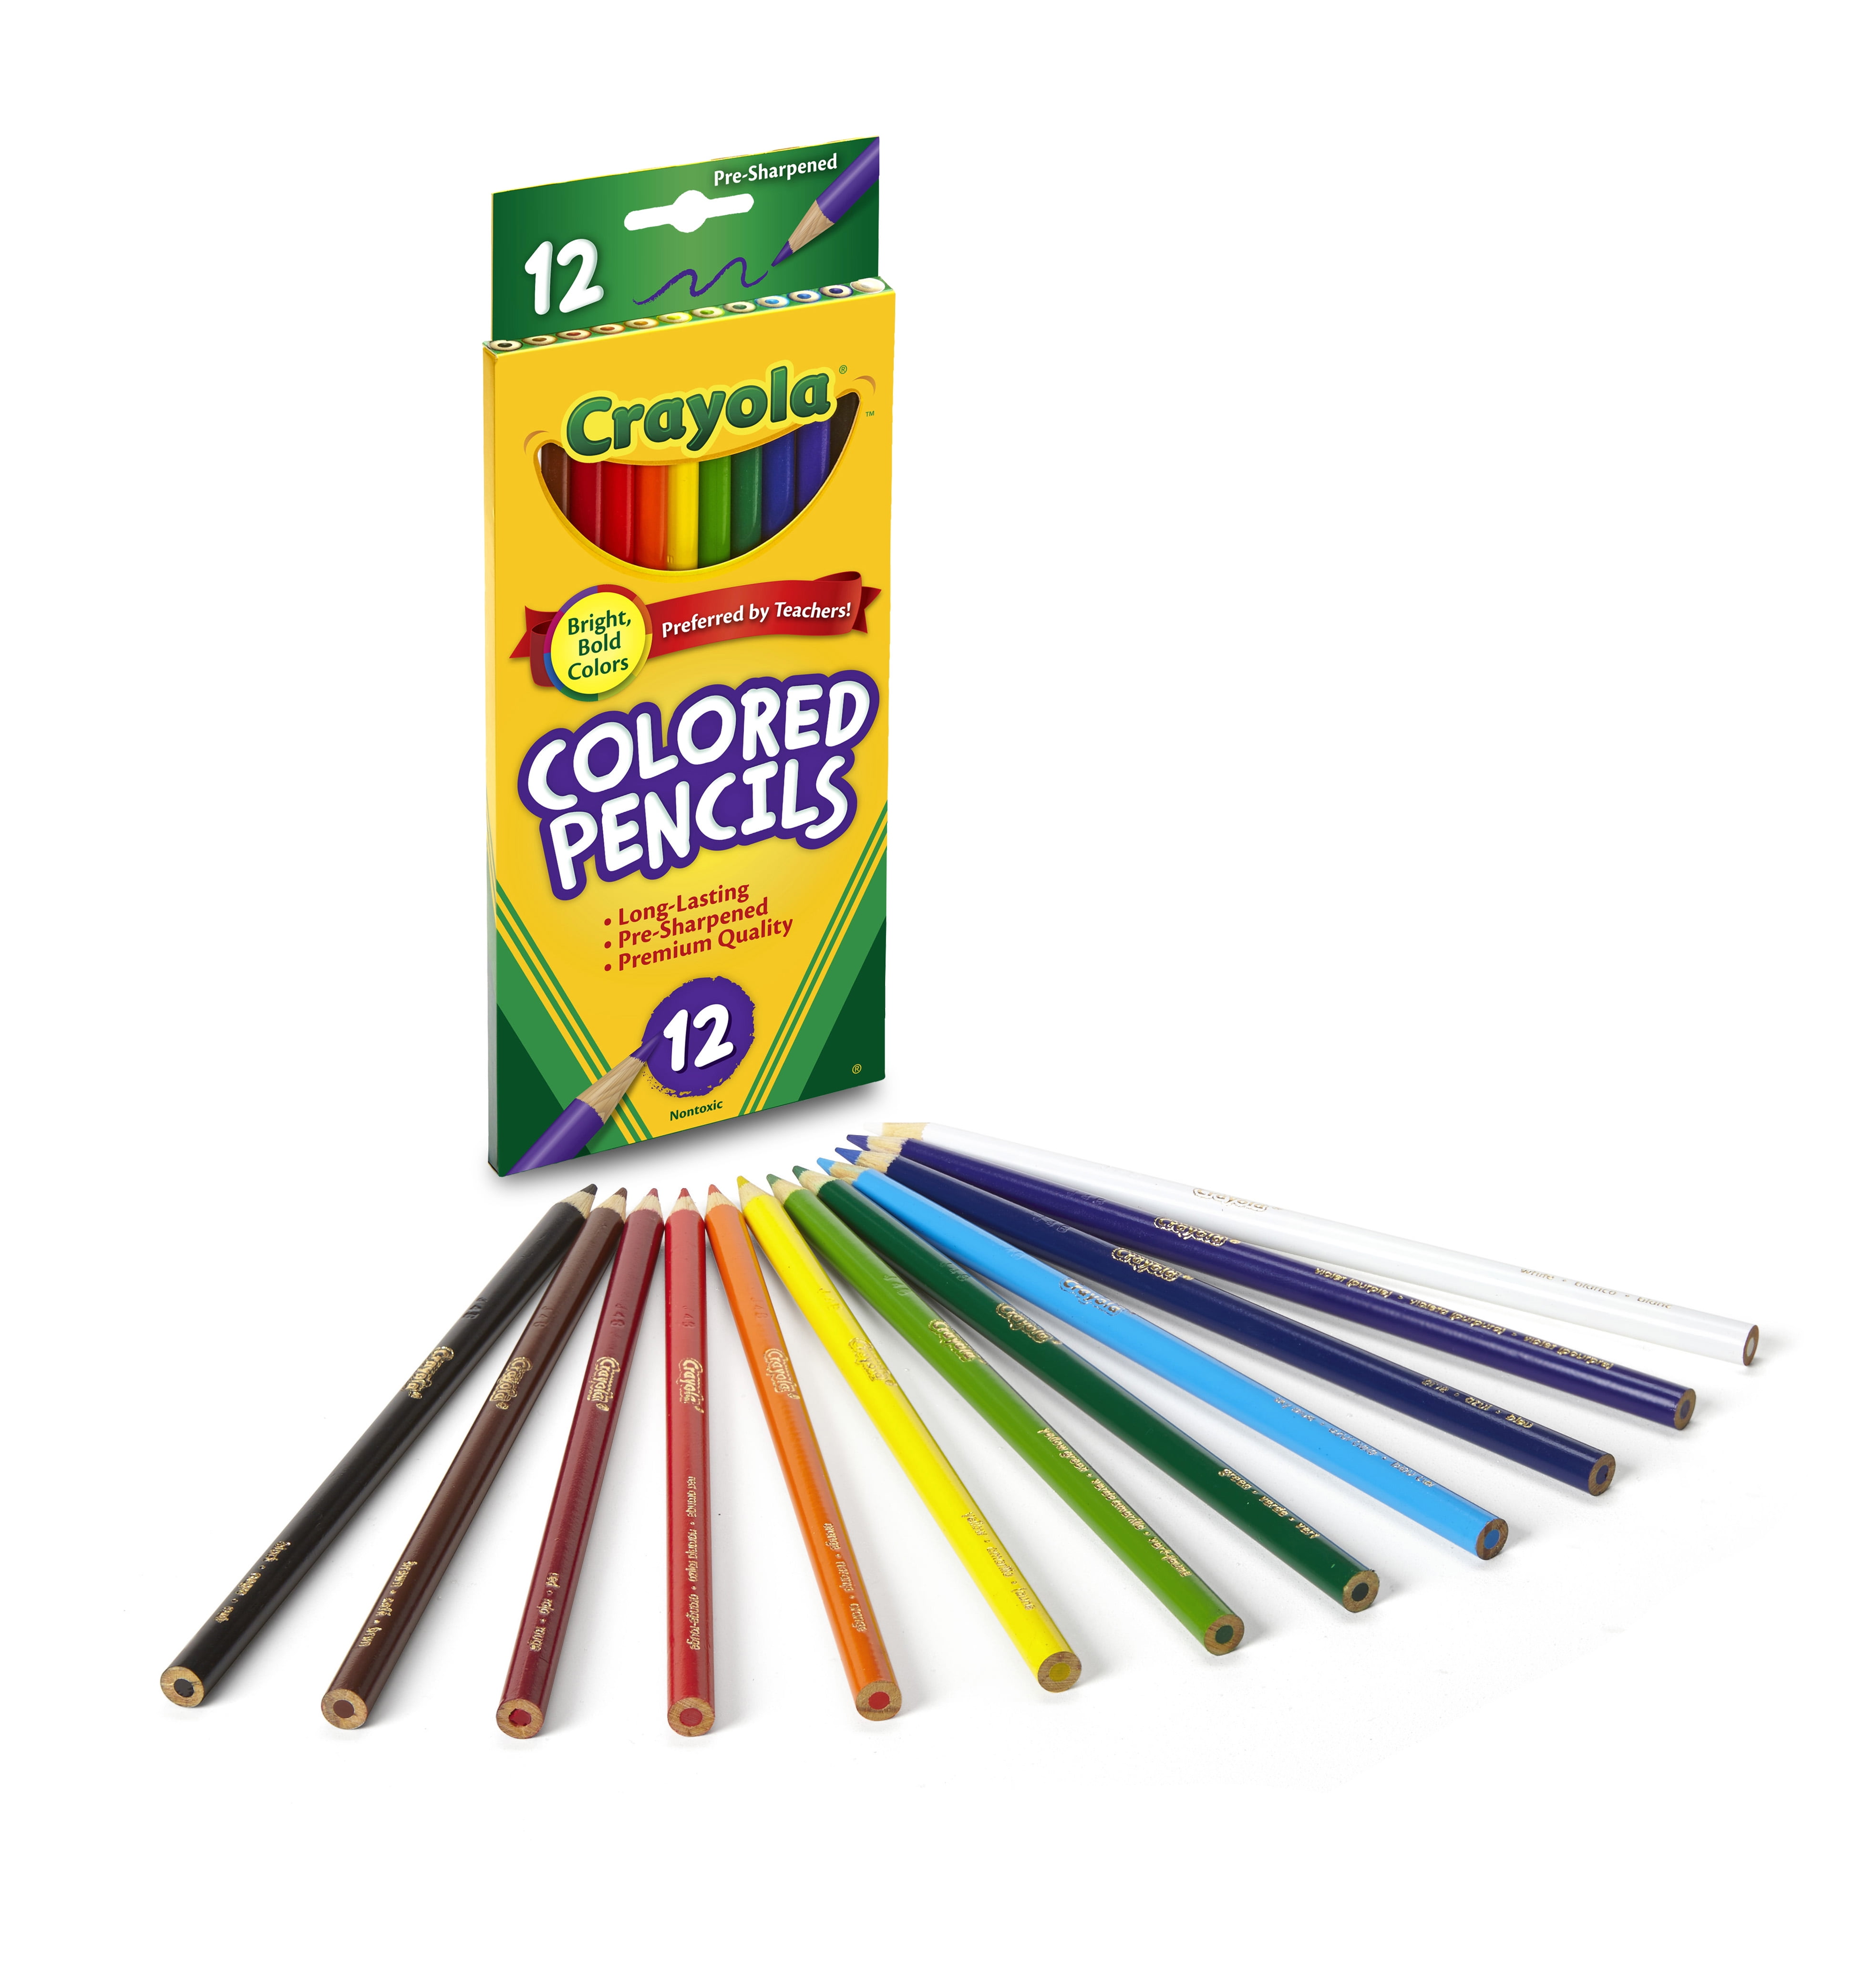 Crayola 12 Count Colored Pencils, 12 Pack Bundle, 144 Pieces